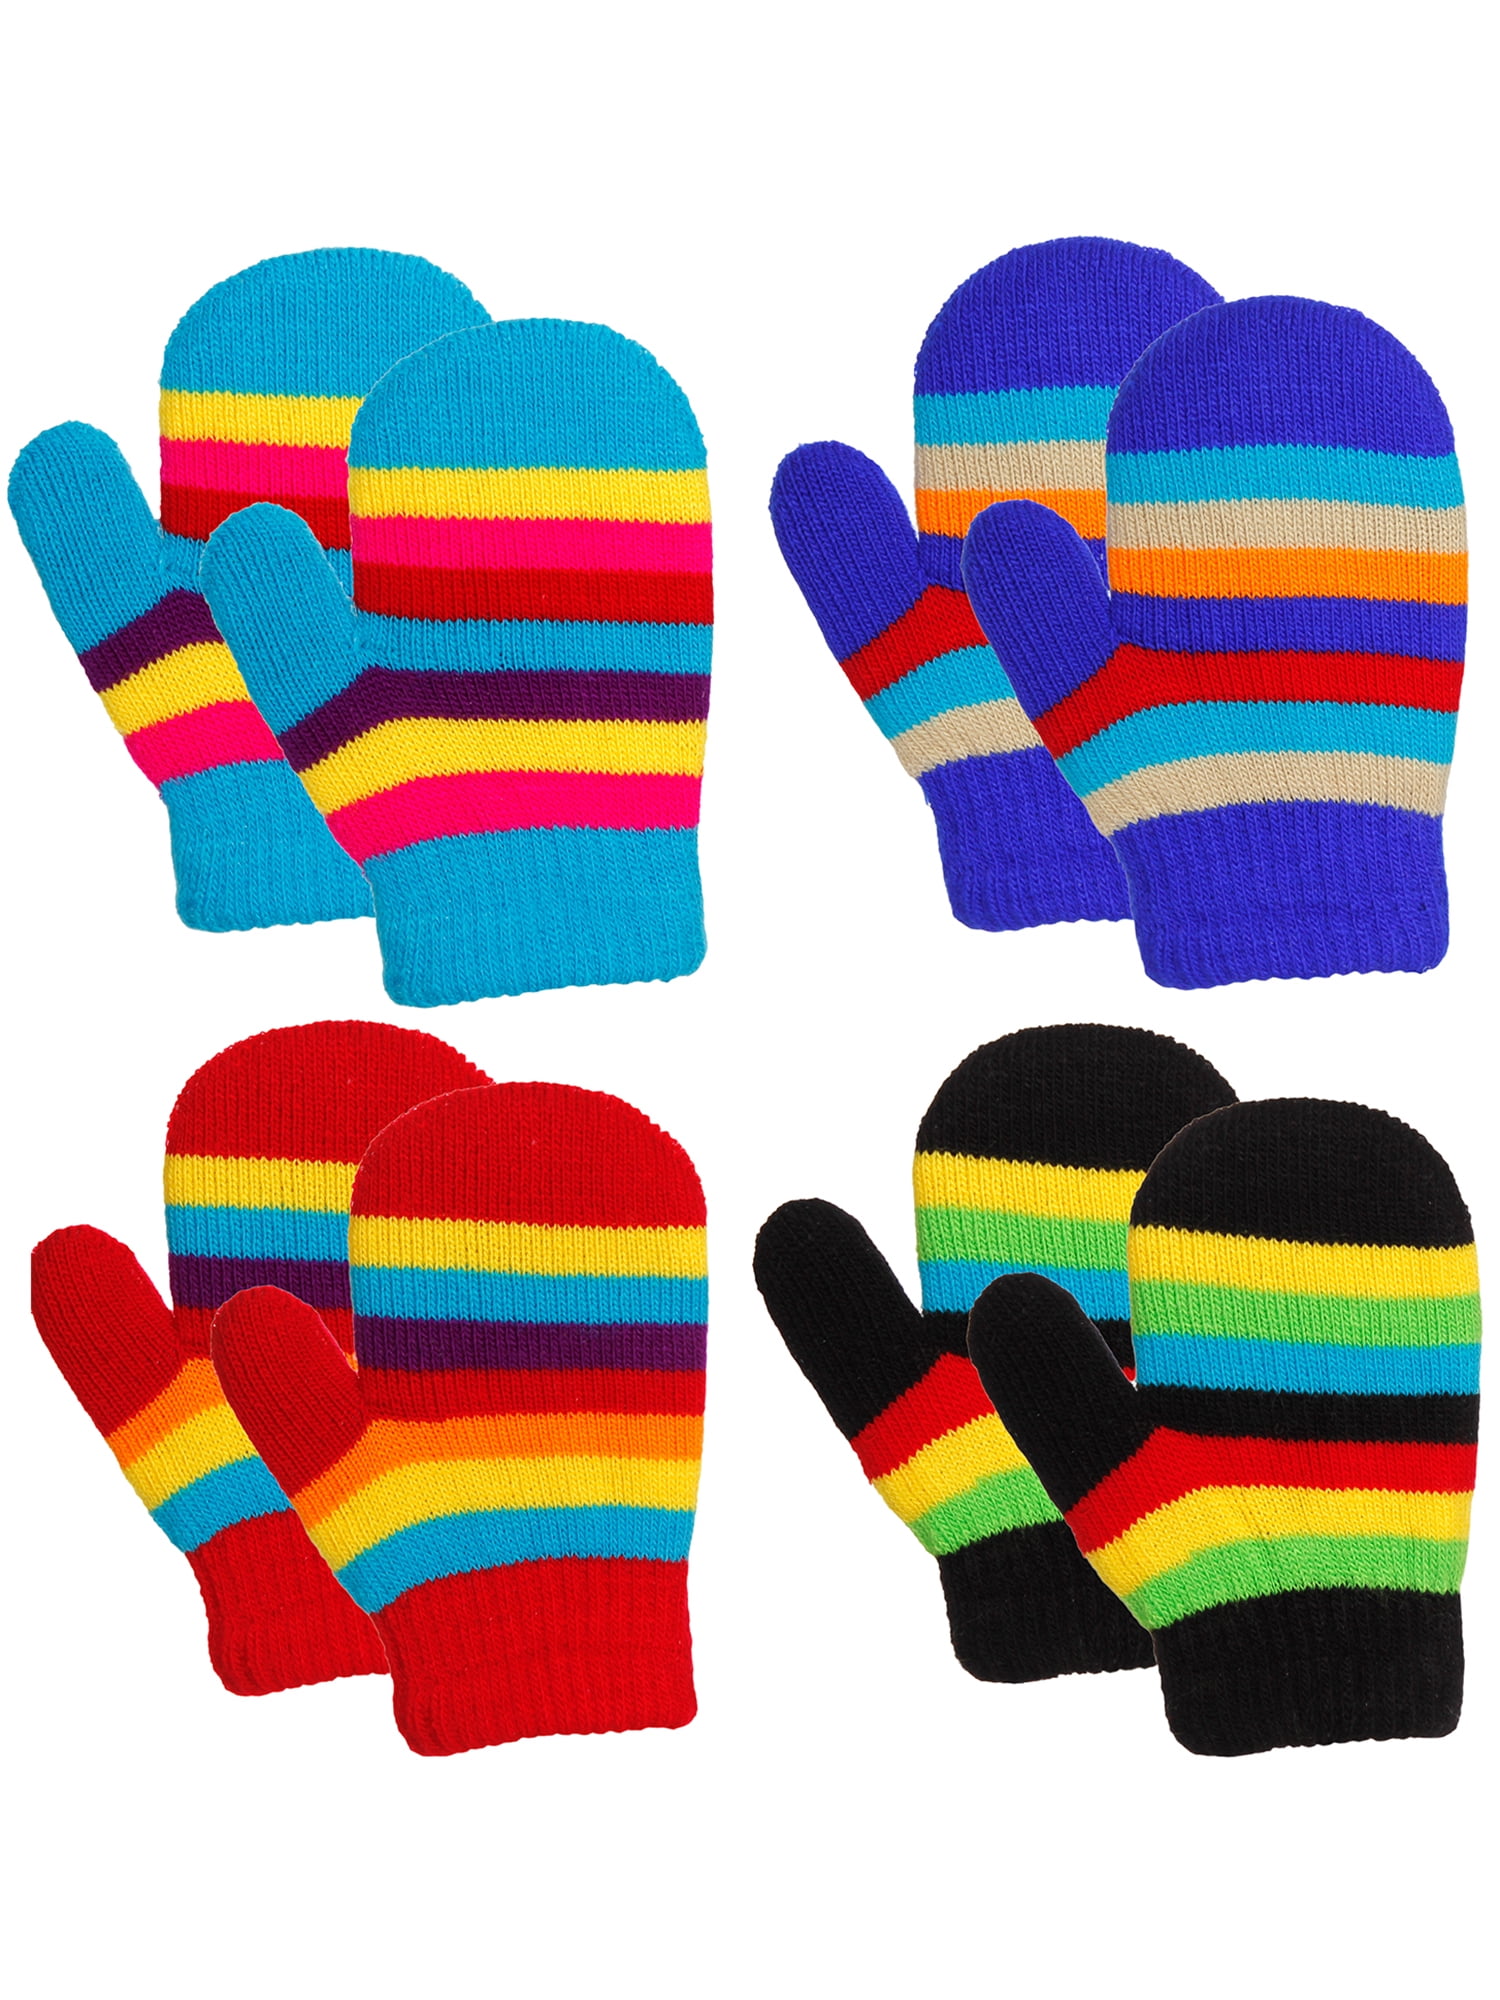 Emmalise Children Kids Winter Cold Weather Winter Knit Gloves 3-8 yrs Old 